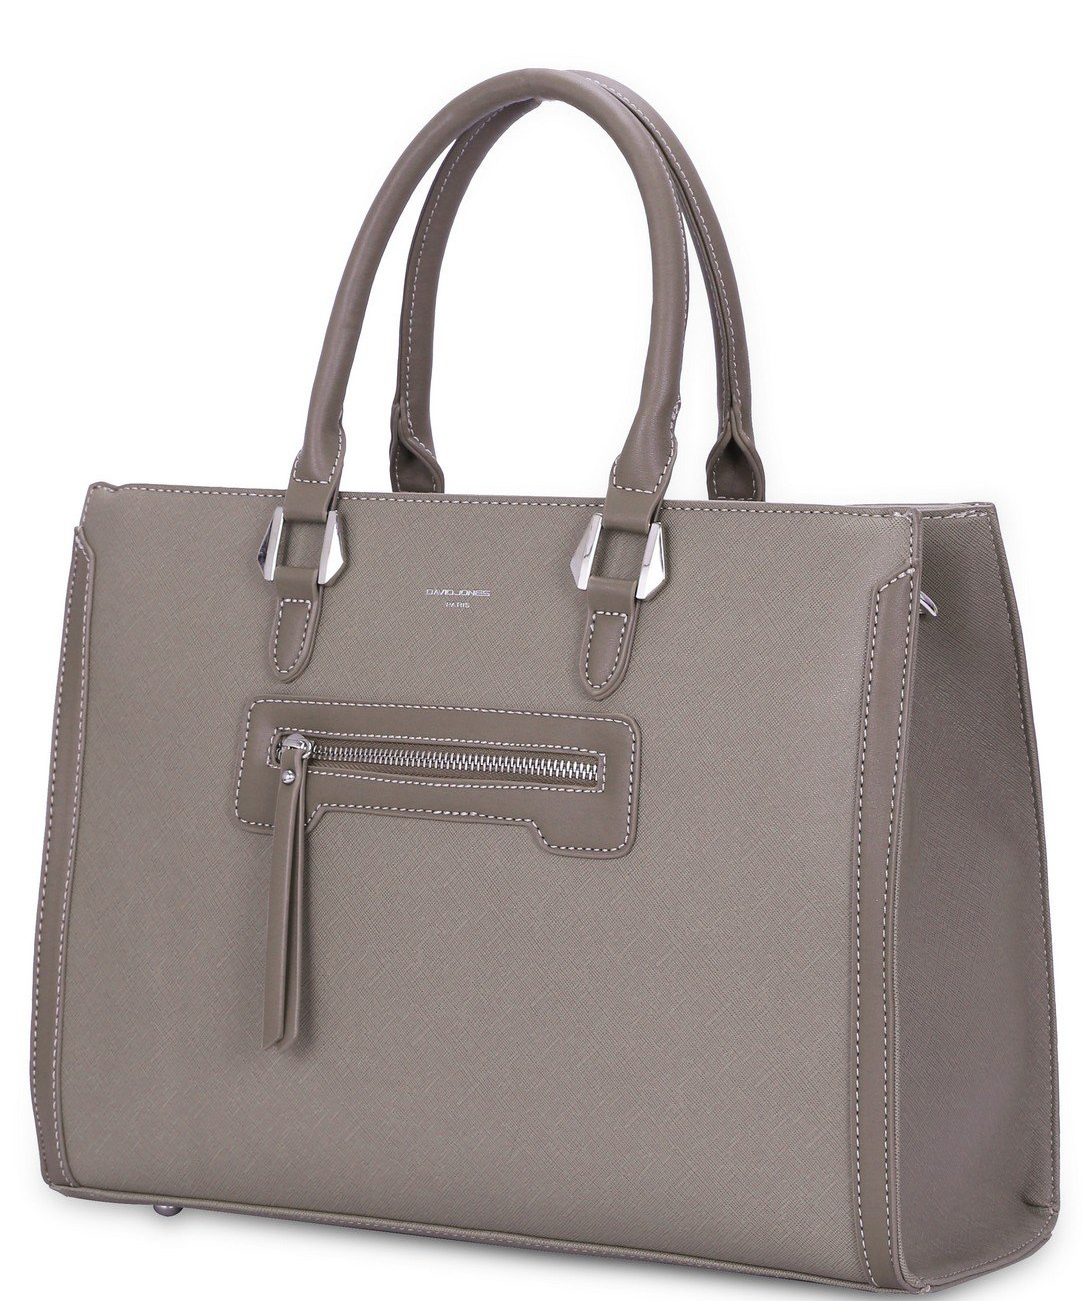 David Jones - Women's handbag handbag - Women's PU leather